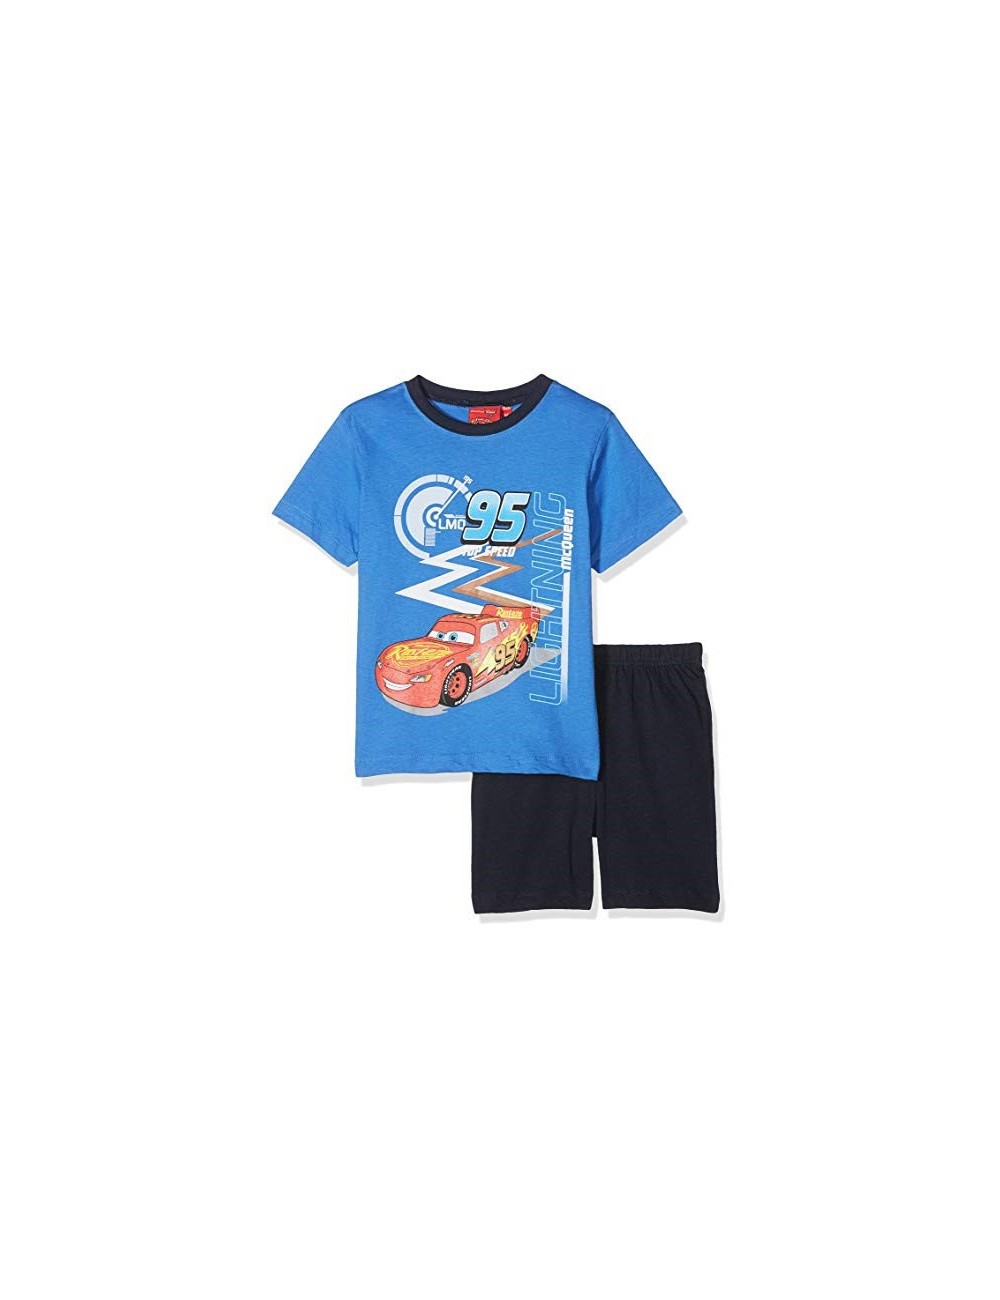 Pijamale Disney Cars, baieti 3-8 ani, albastru